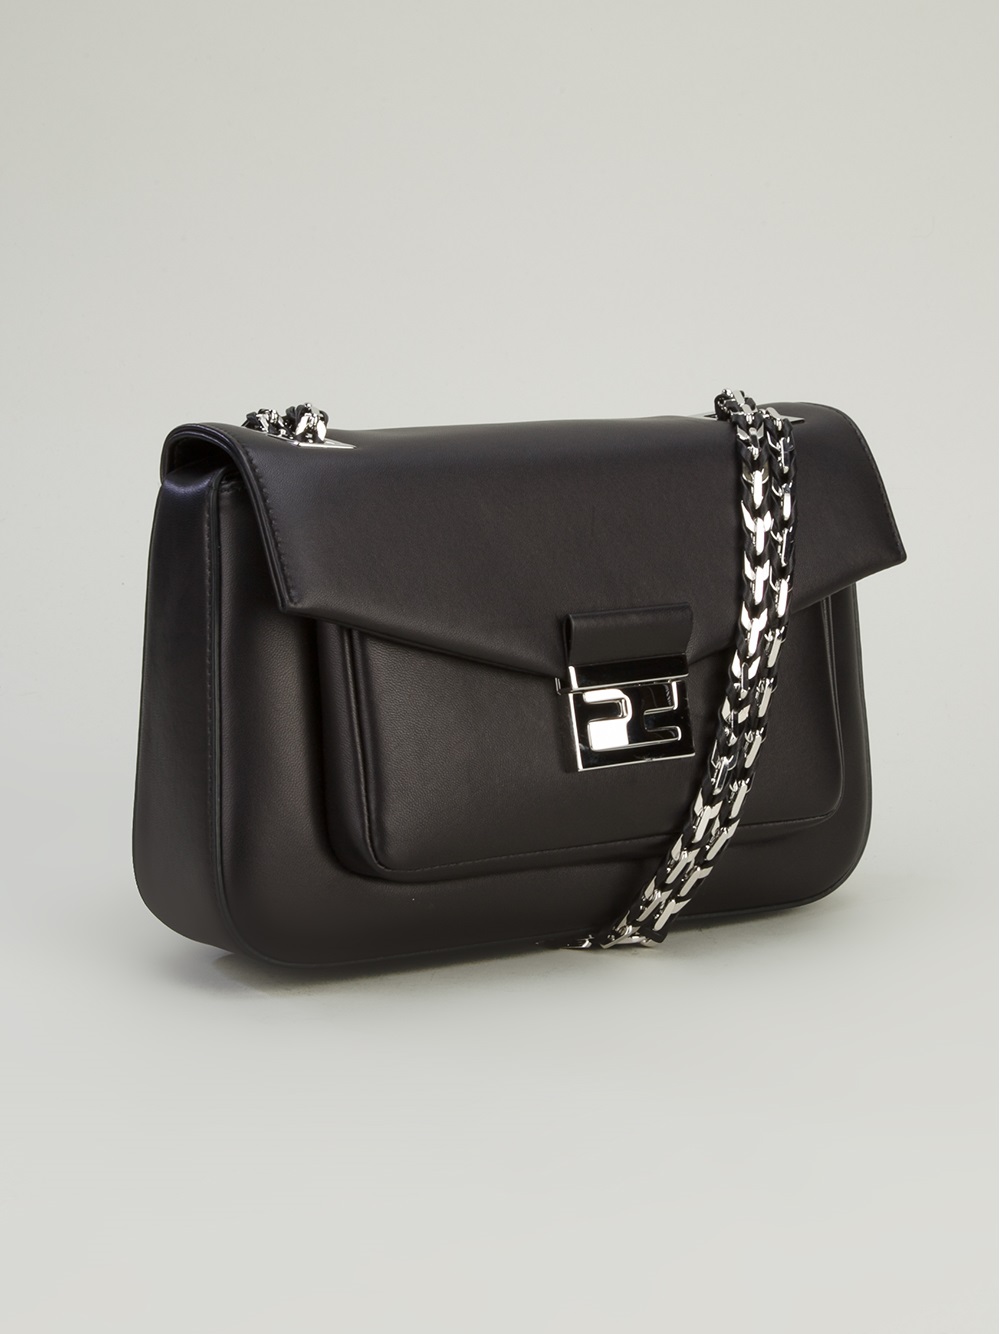 Fendi Chain Strap Shoulder Bag in Black - Lyst